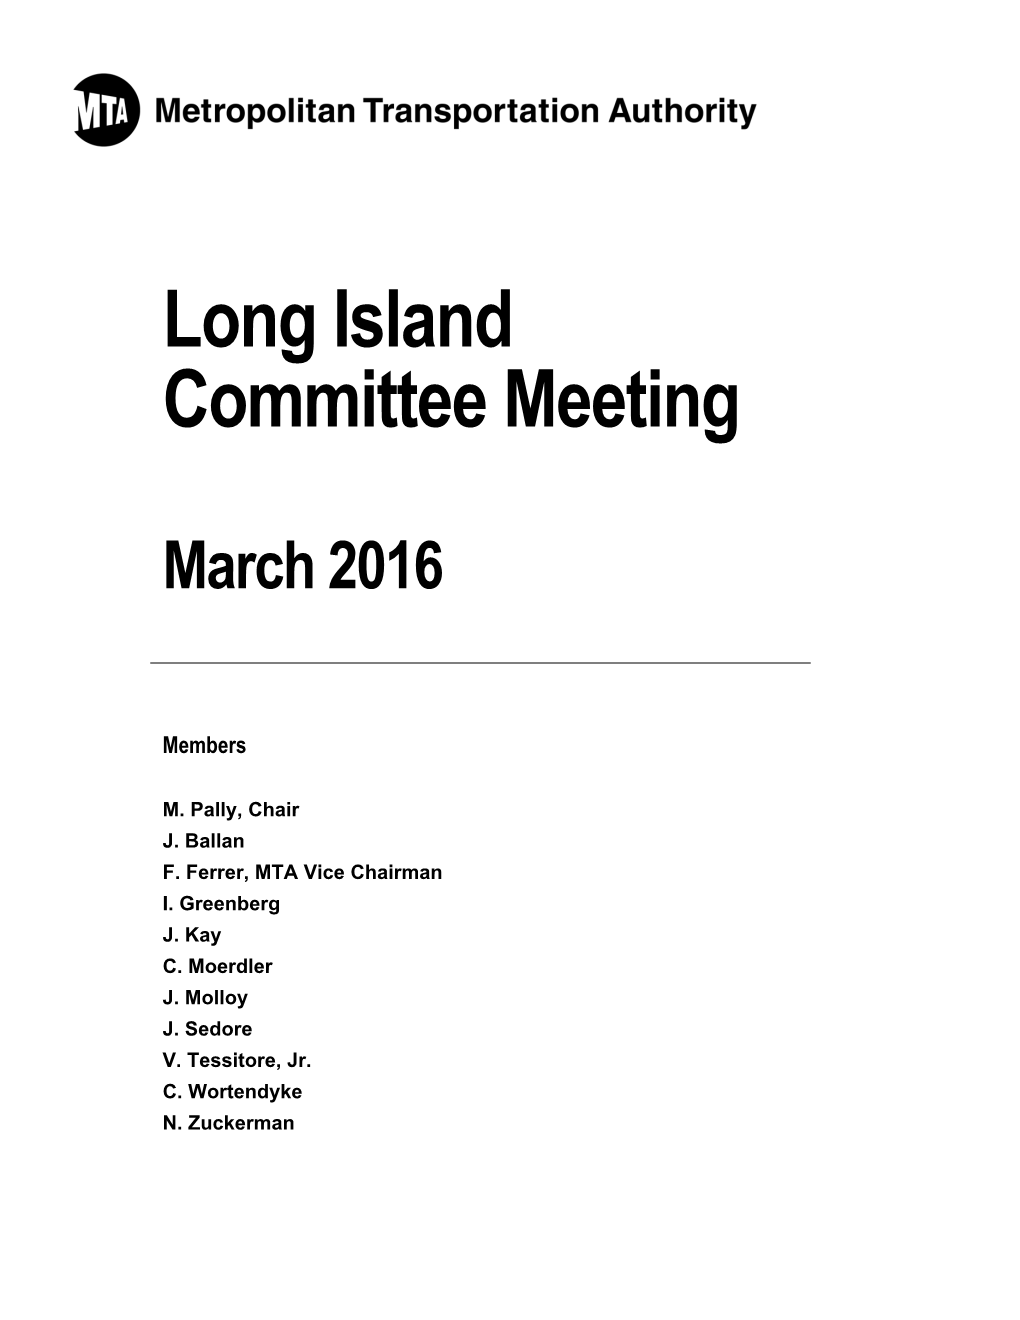 Long Island Rail Road Committee Monday, February 22, 2016